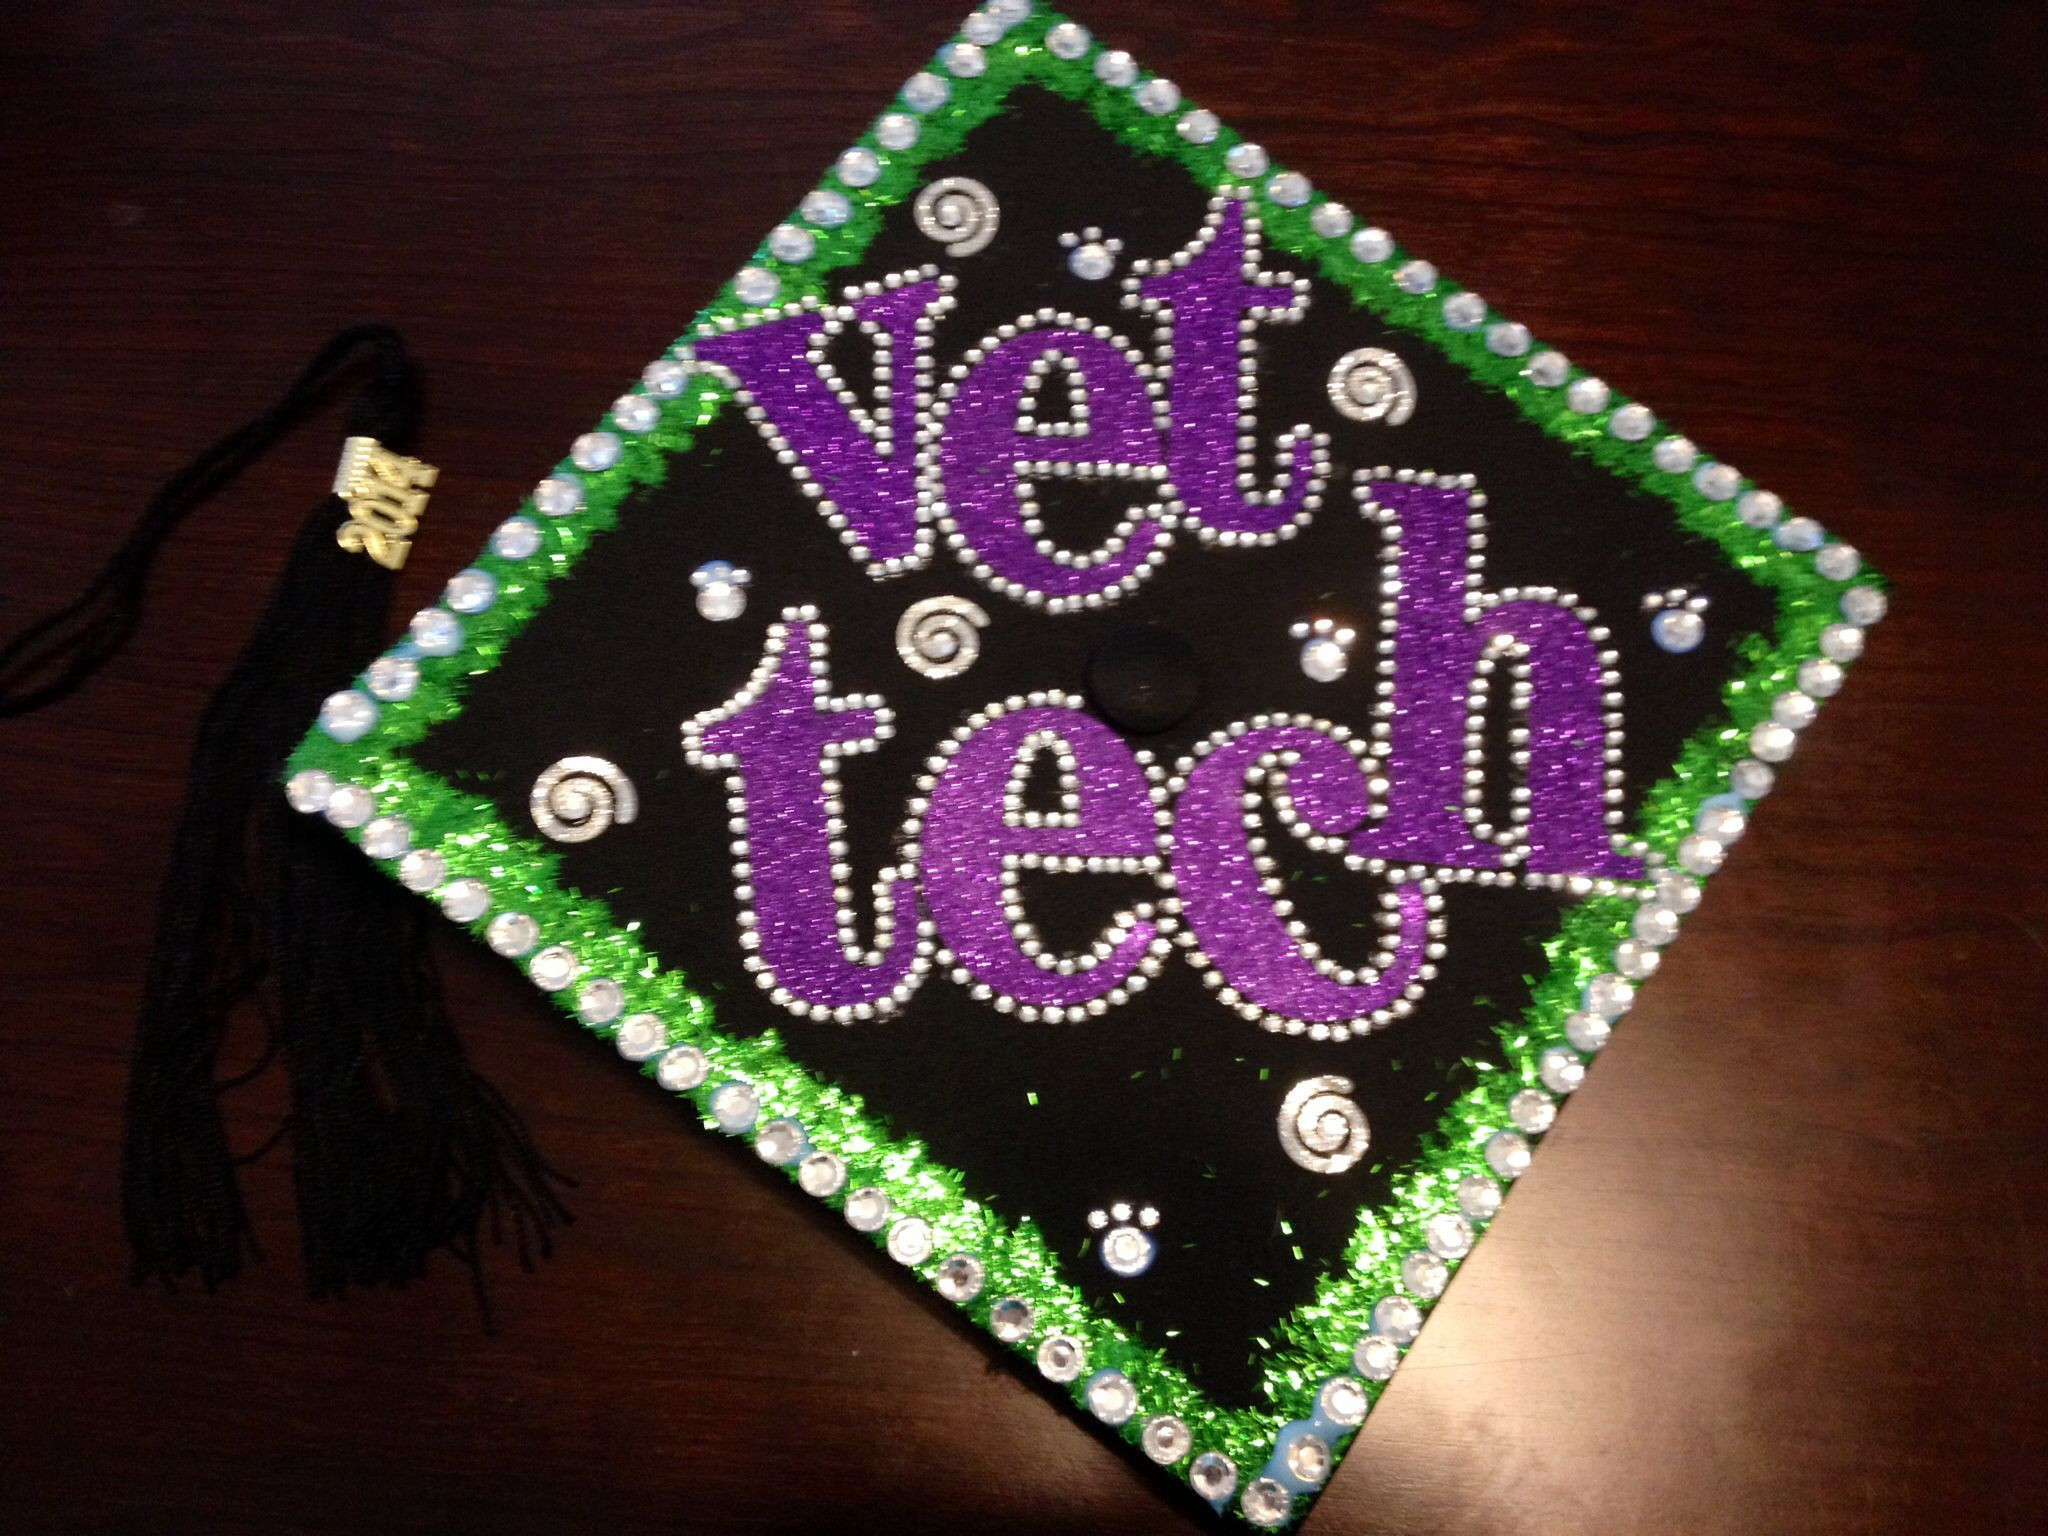 Vet School Graduation Gift Ideas
 Graduation cap decoration from vet tech school